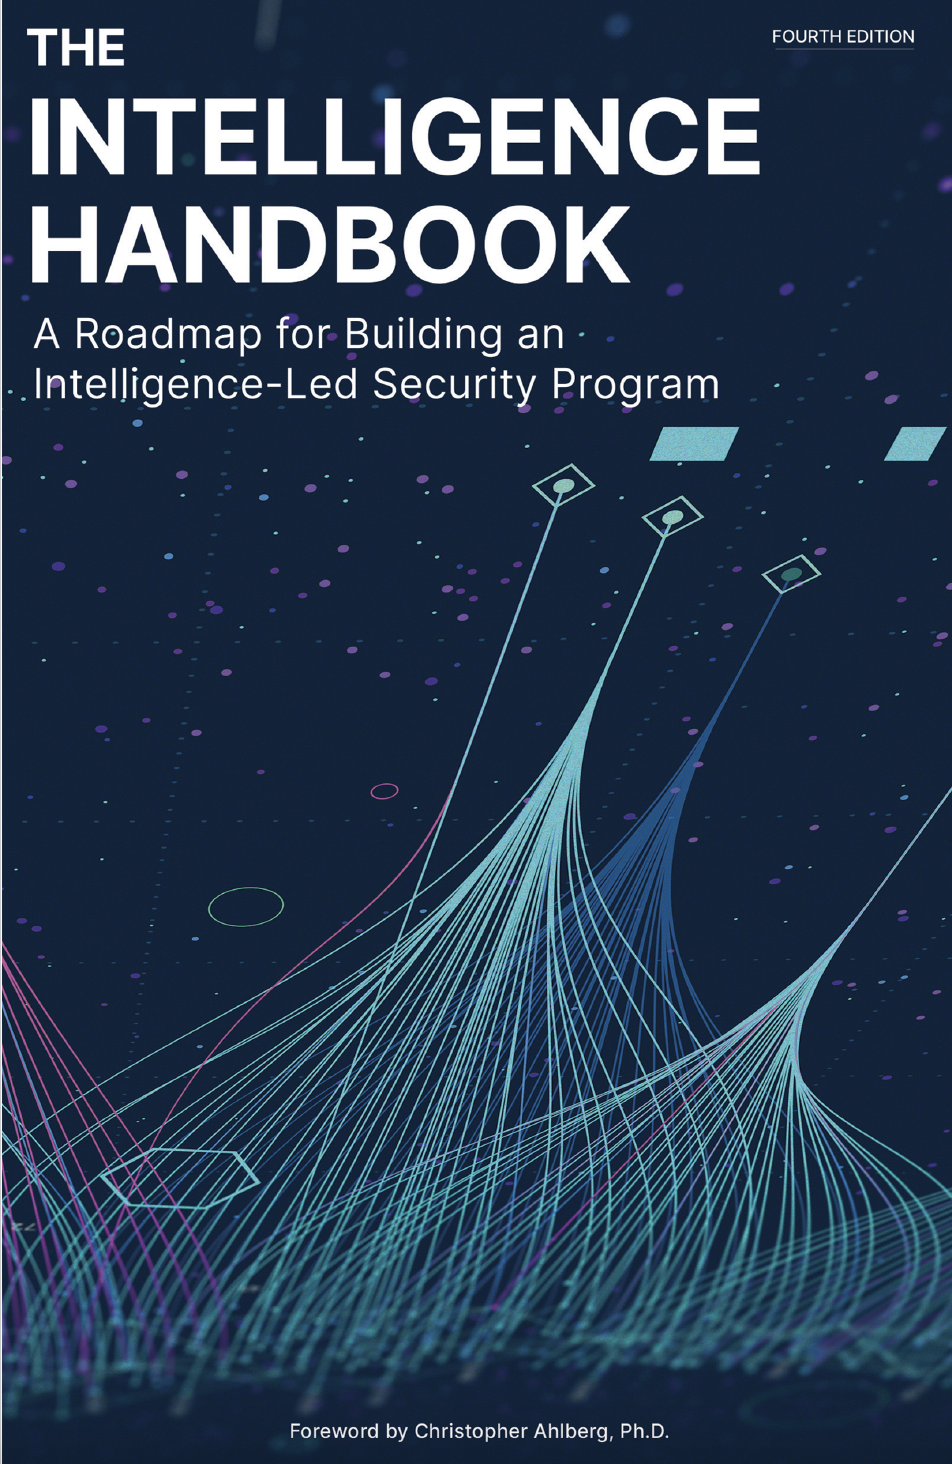 Recorded Future Intelligence Handbook